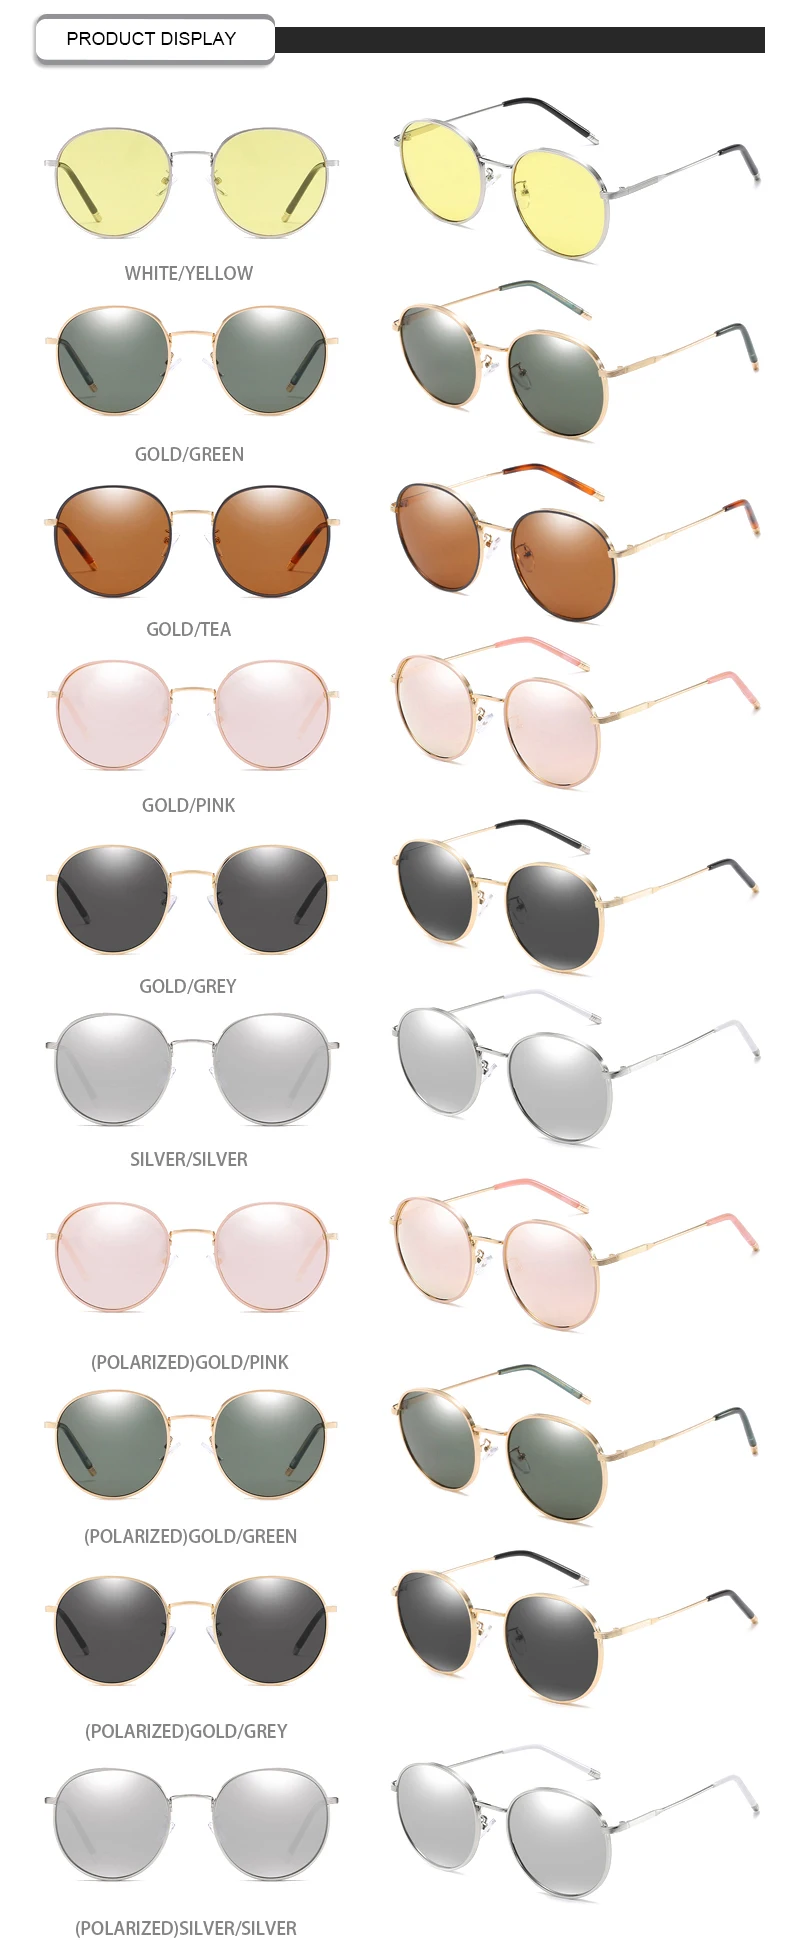 2019 New Metal Frame Round Gafas De Sol Women Men Oem Polarized Sunglasses